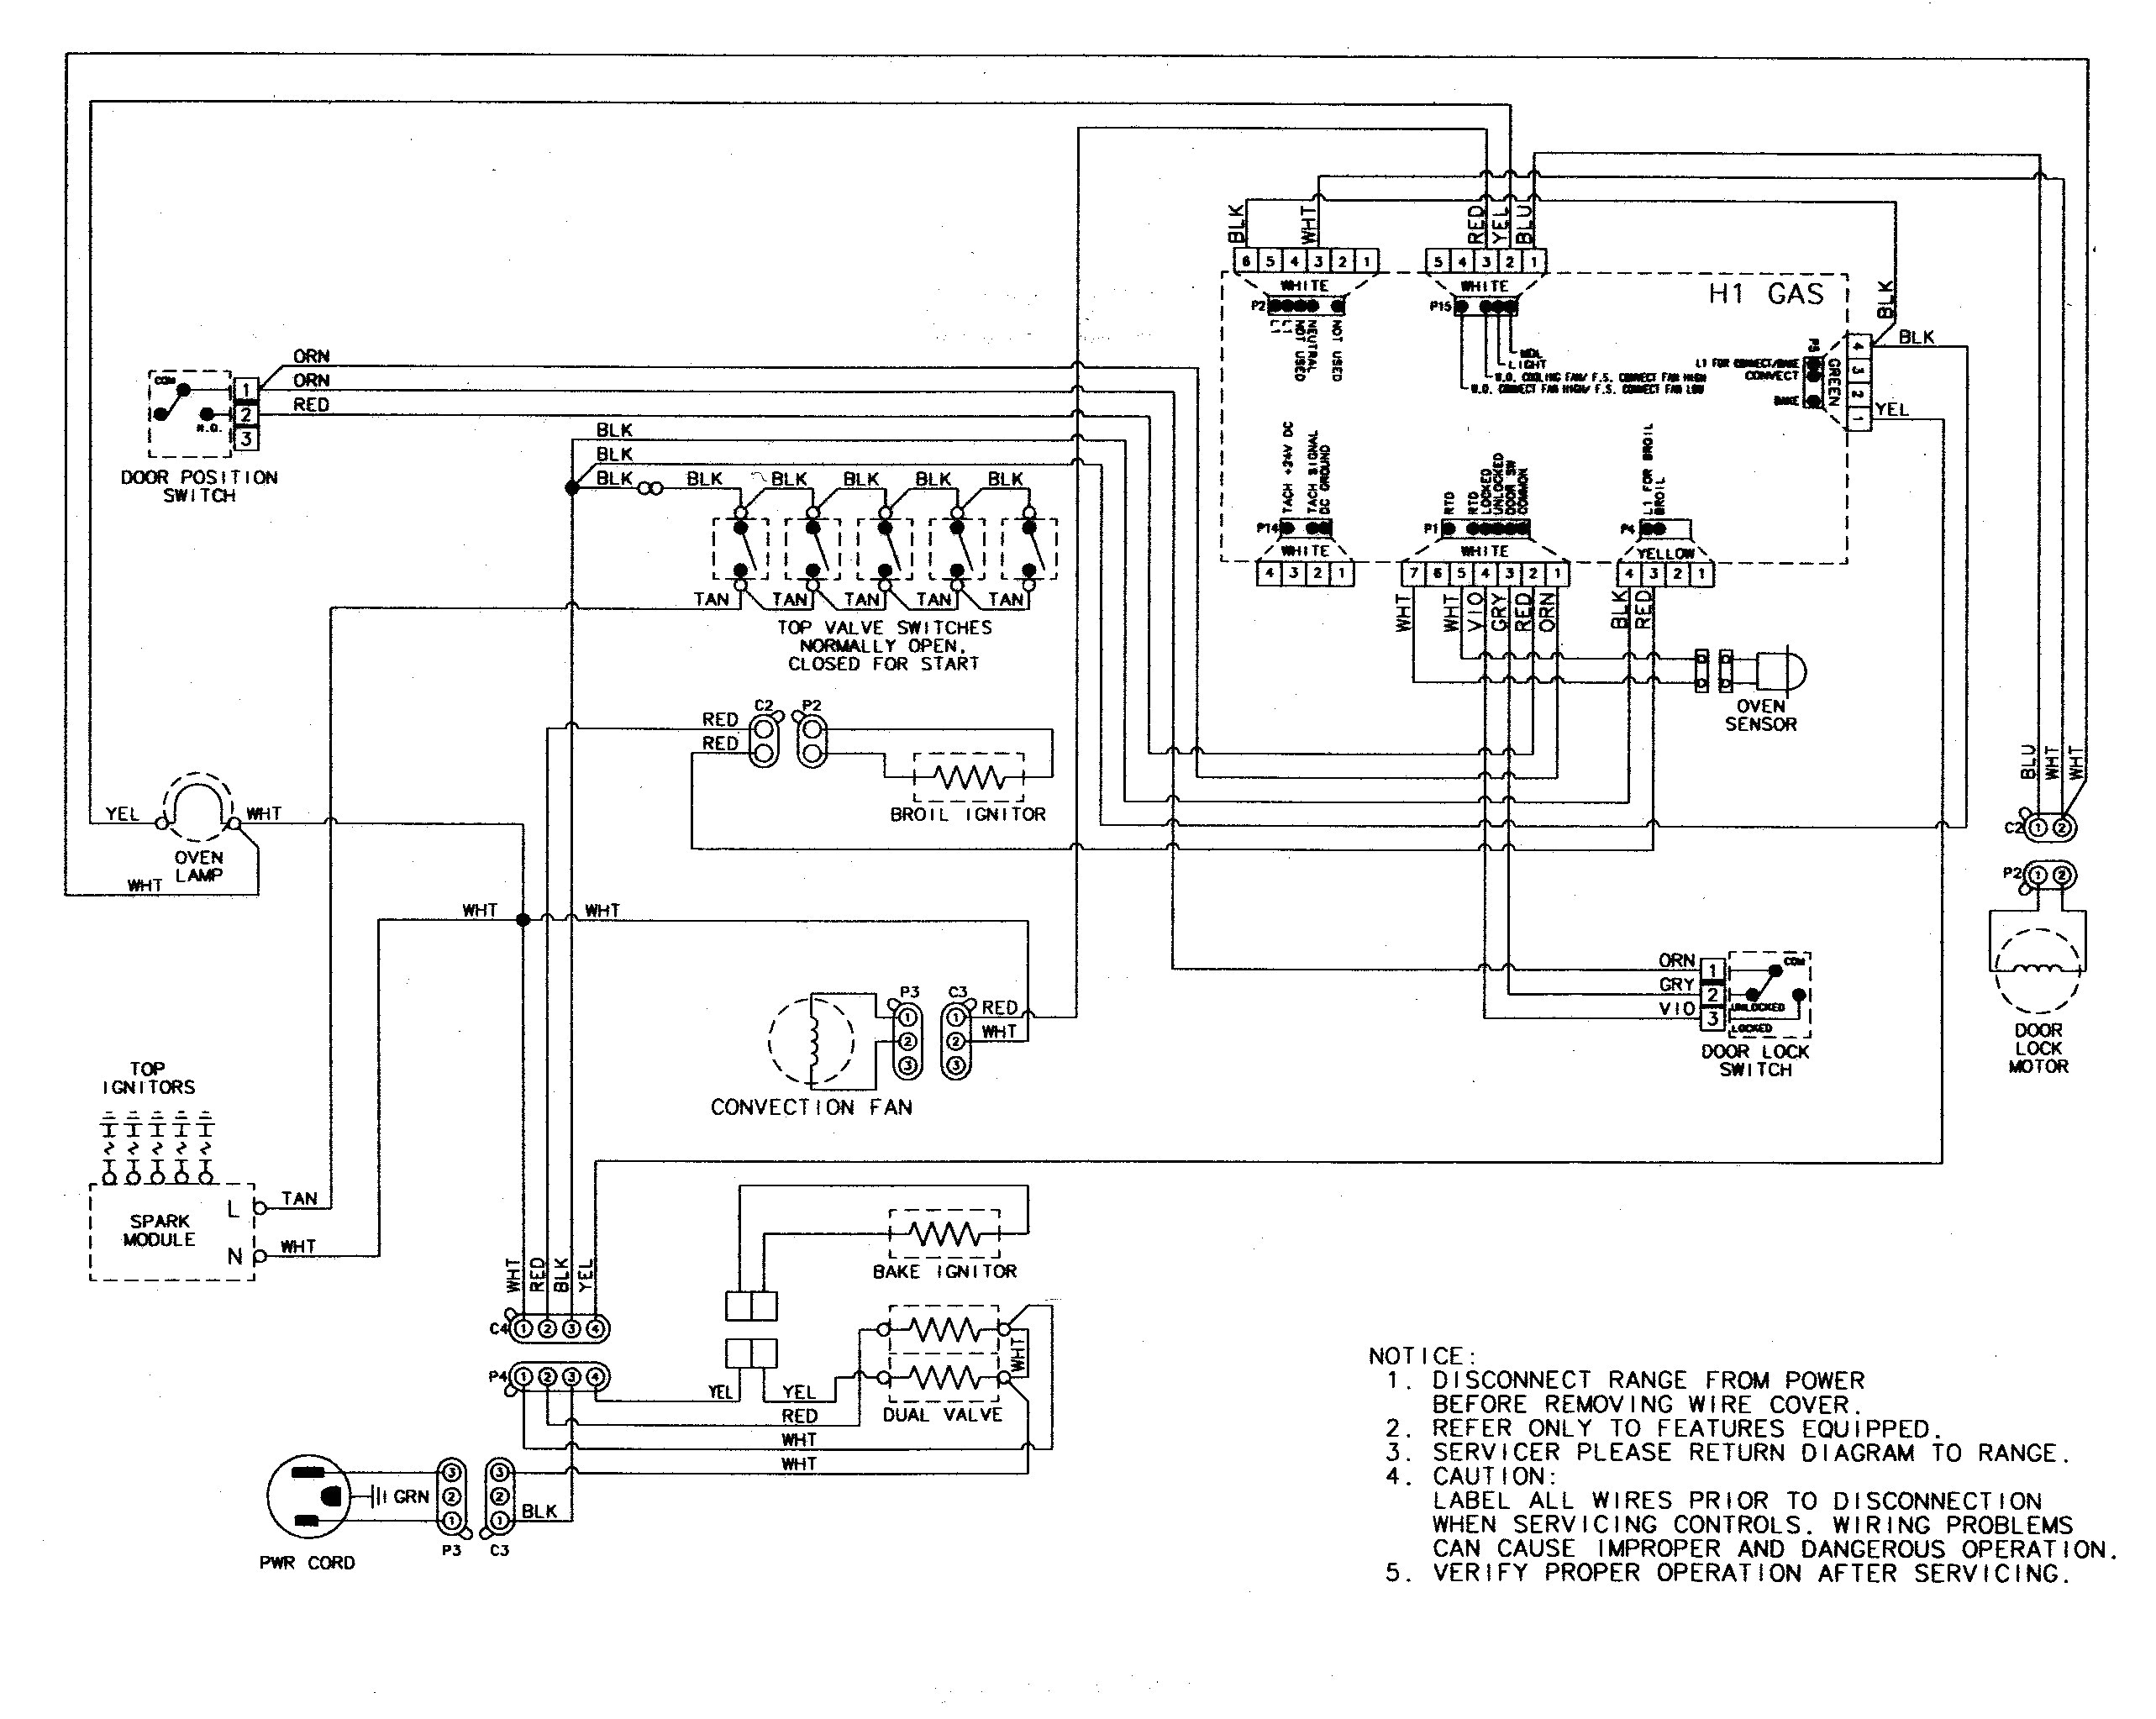 hotpoint dryer timer wiring diagram ge dryer start switch wiring diagram inspirationa ge electric dryer timer switch wiring diagram free download 7n jpg